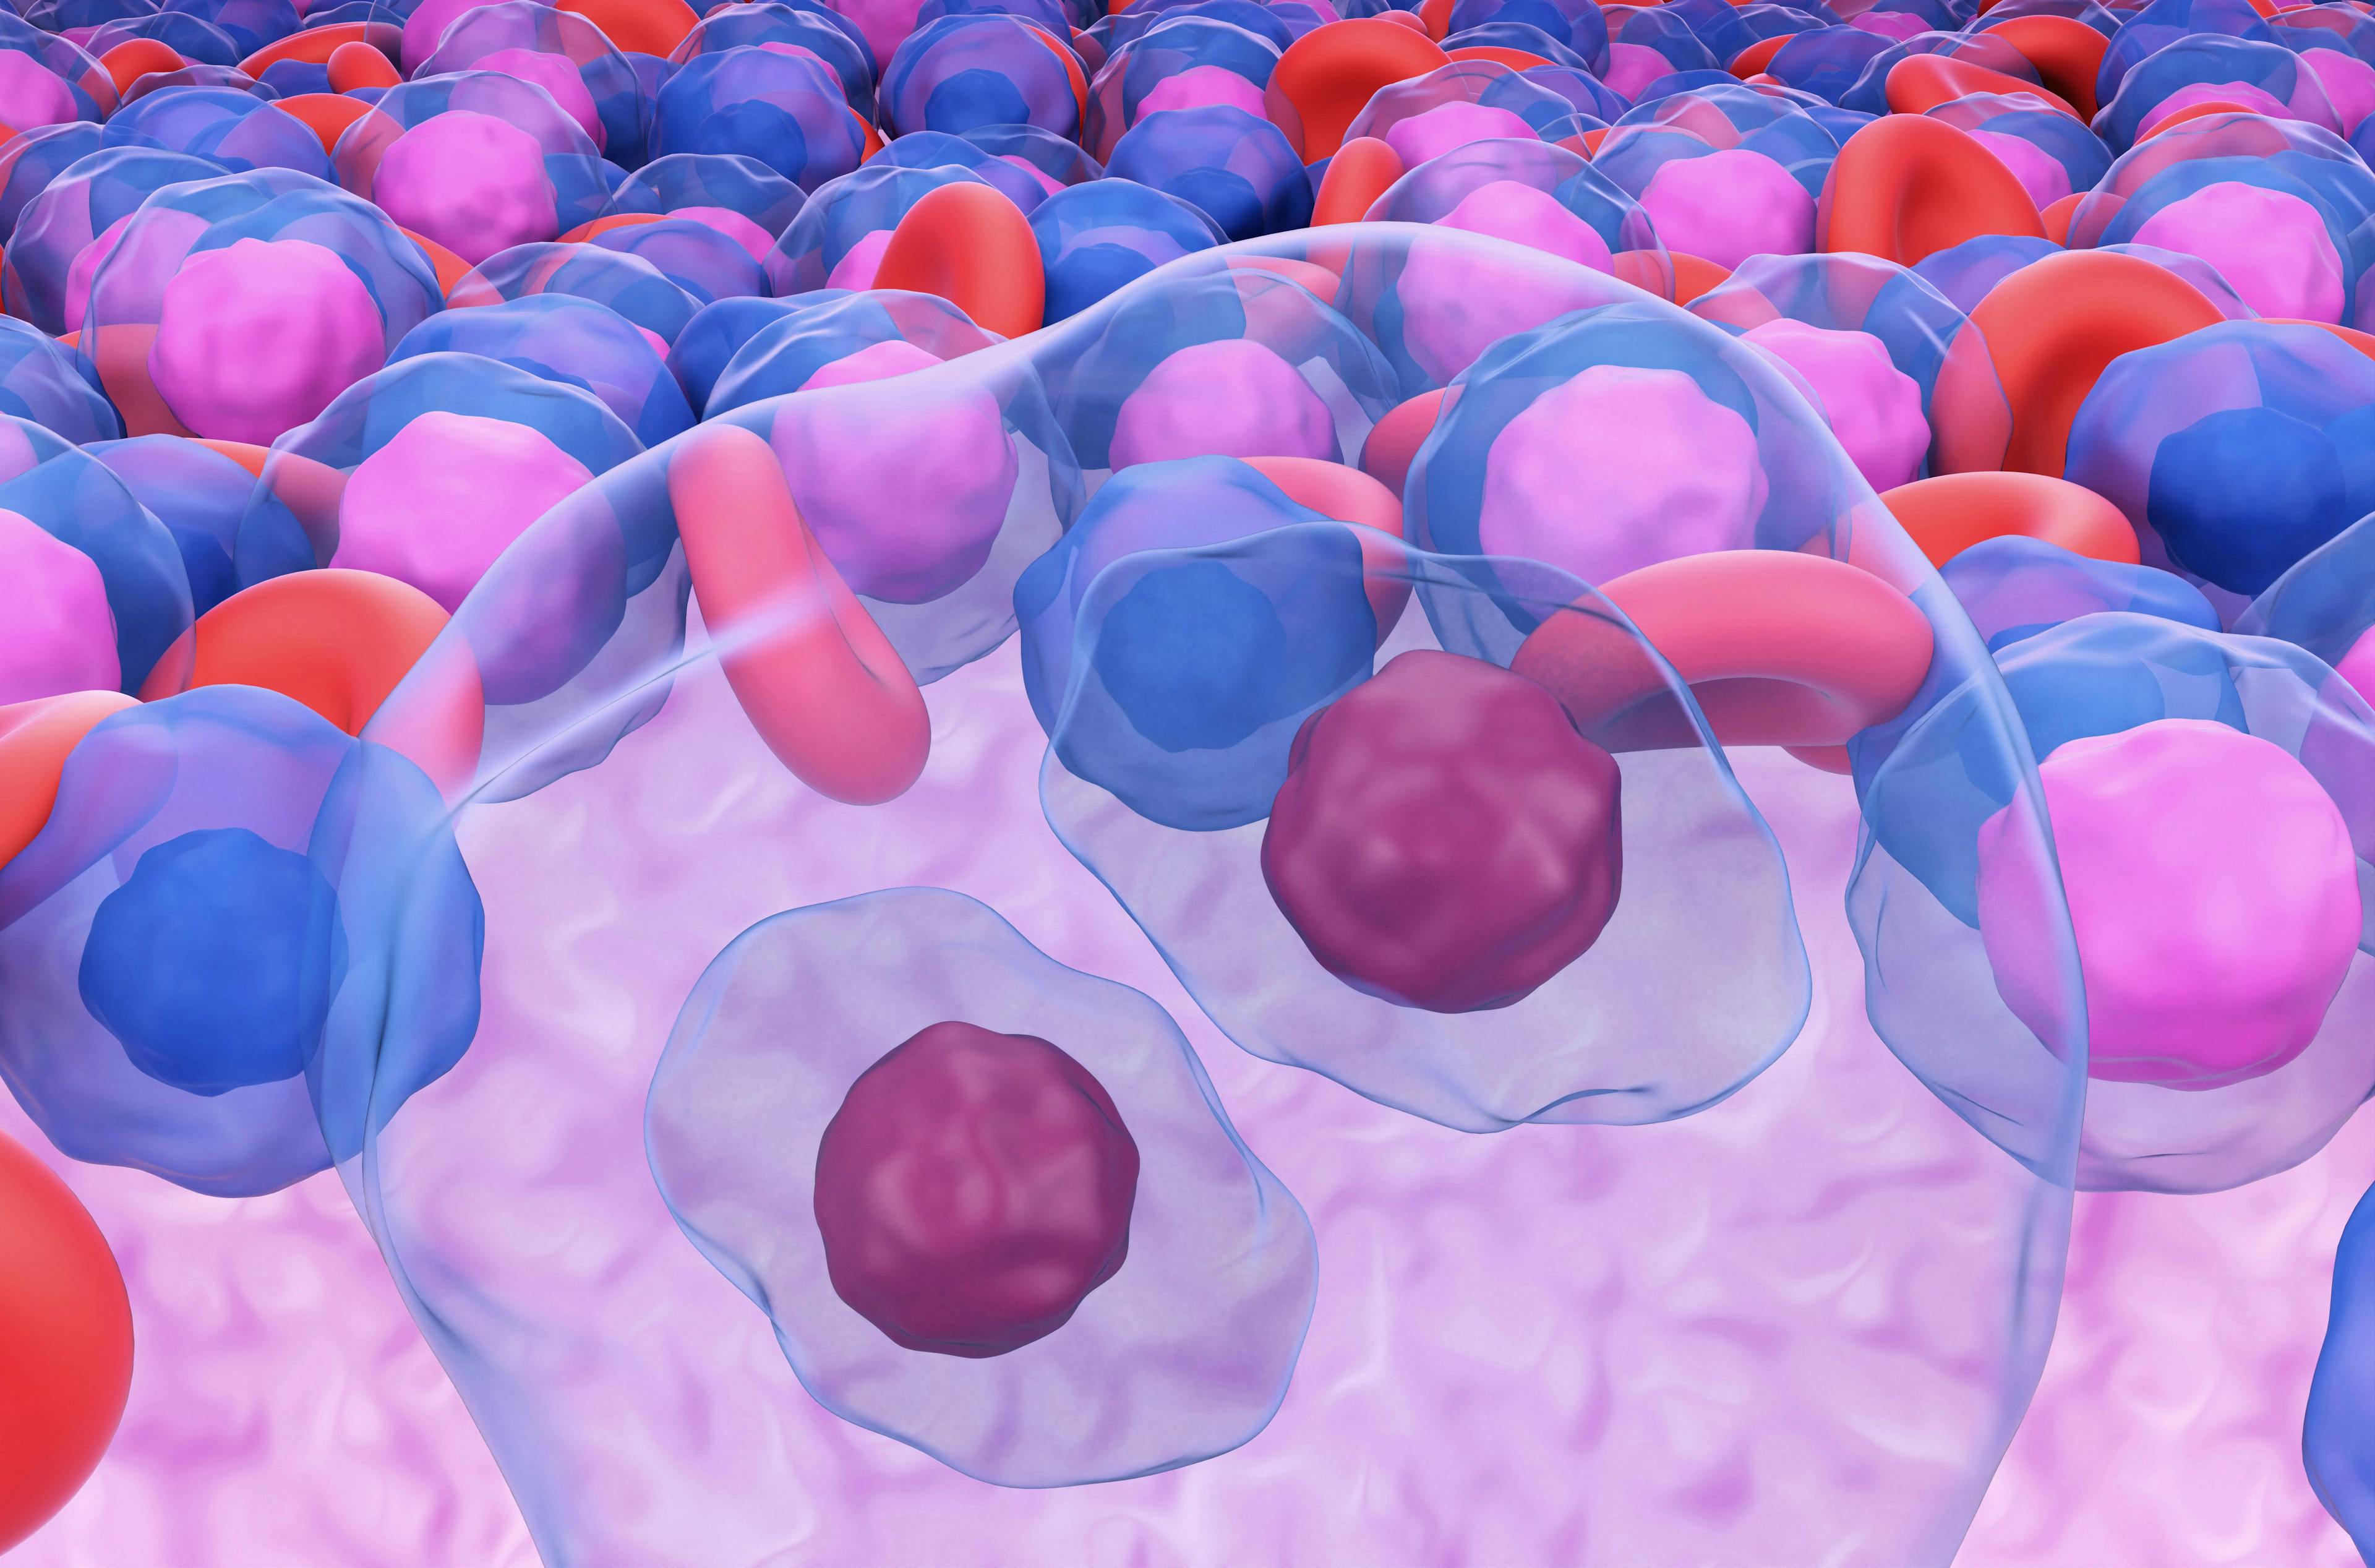 Reed-Sternberg cell in hodgkin lymphoma closeup view 3d render illustration. Credit: LASZLO - stock.adobe.com